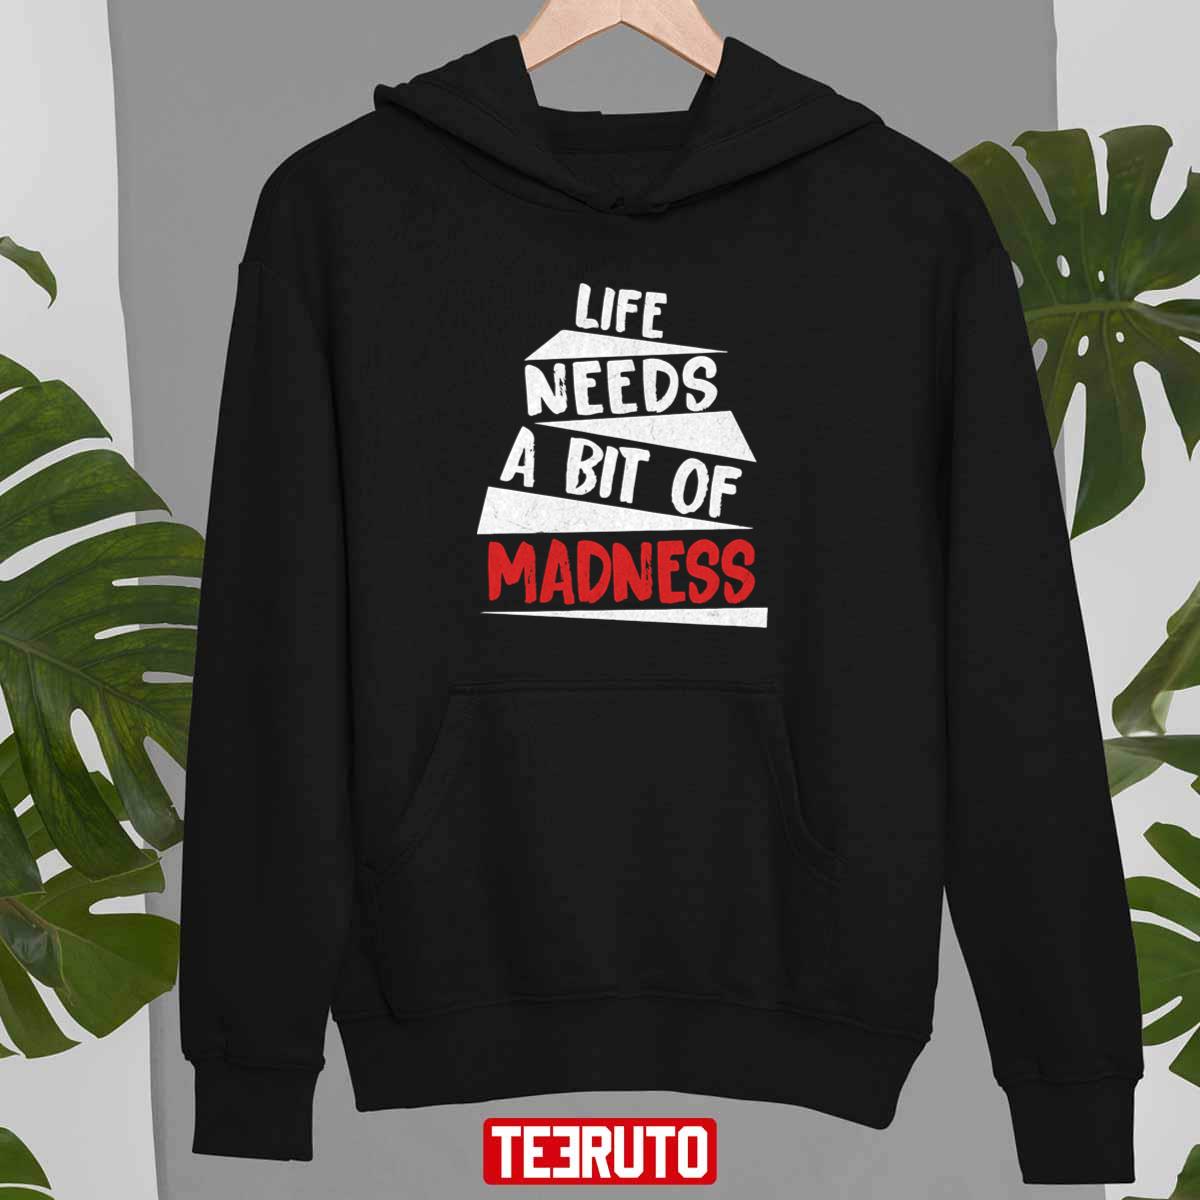 Trending Life Needs A Bit Of Madness Unisex T-shirt